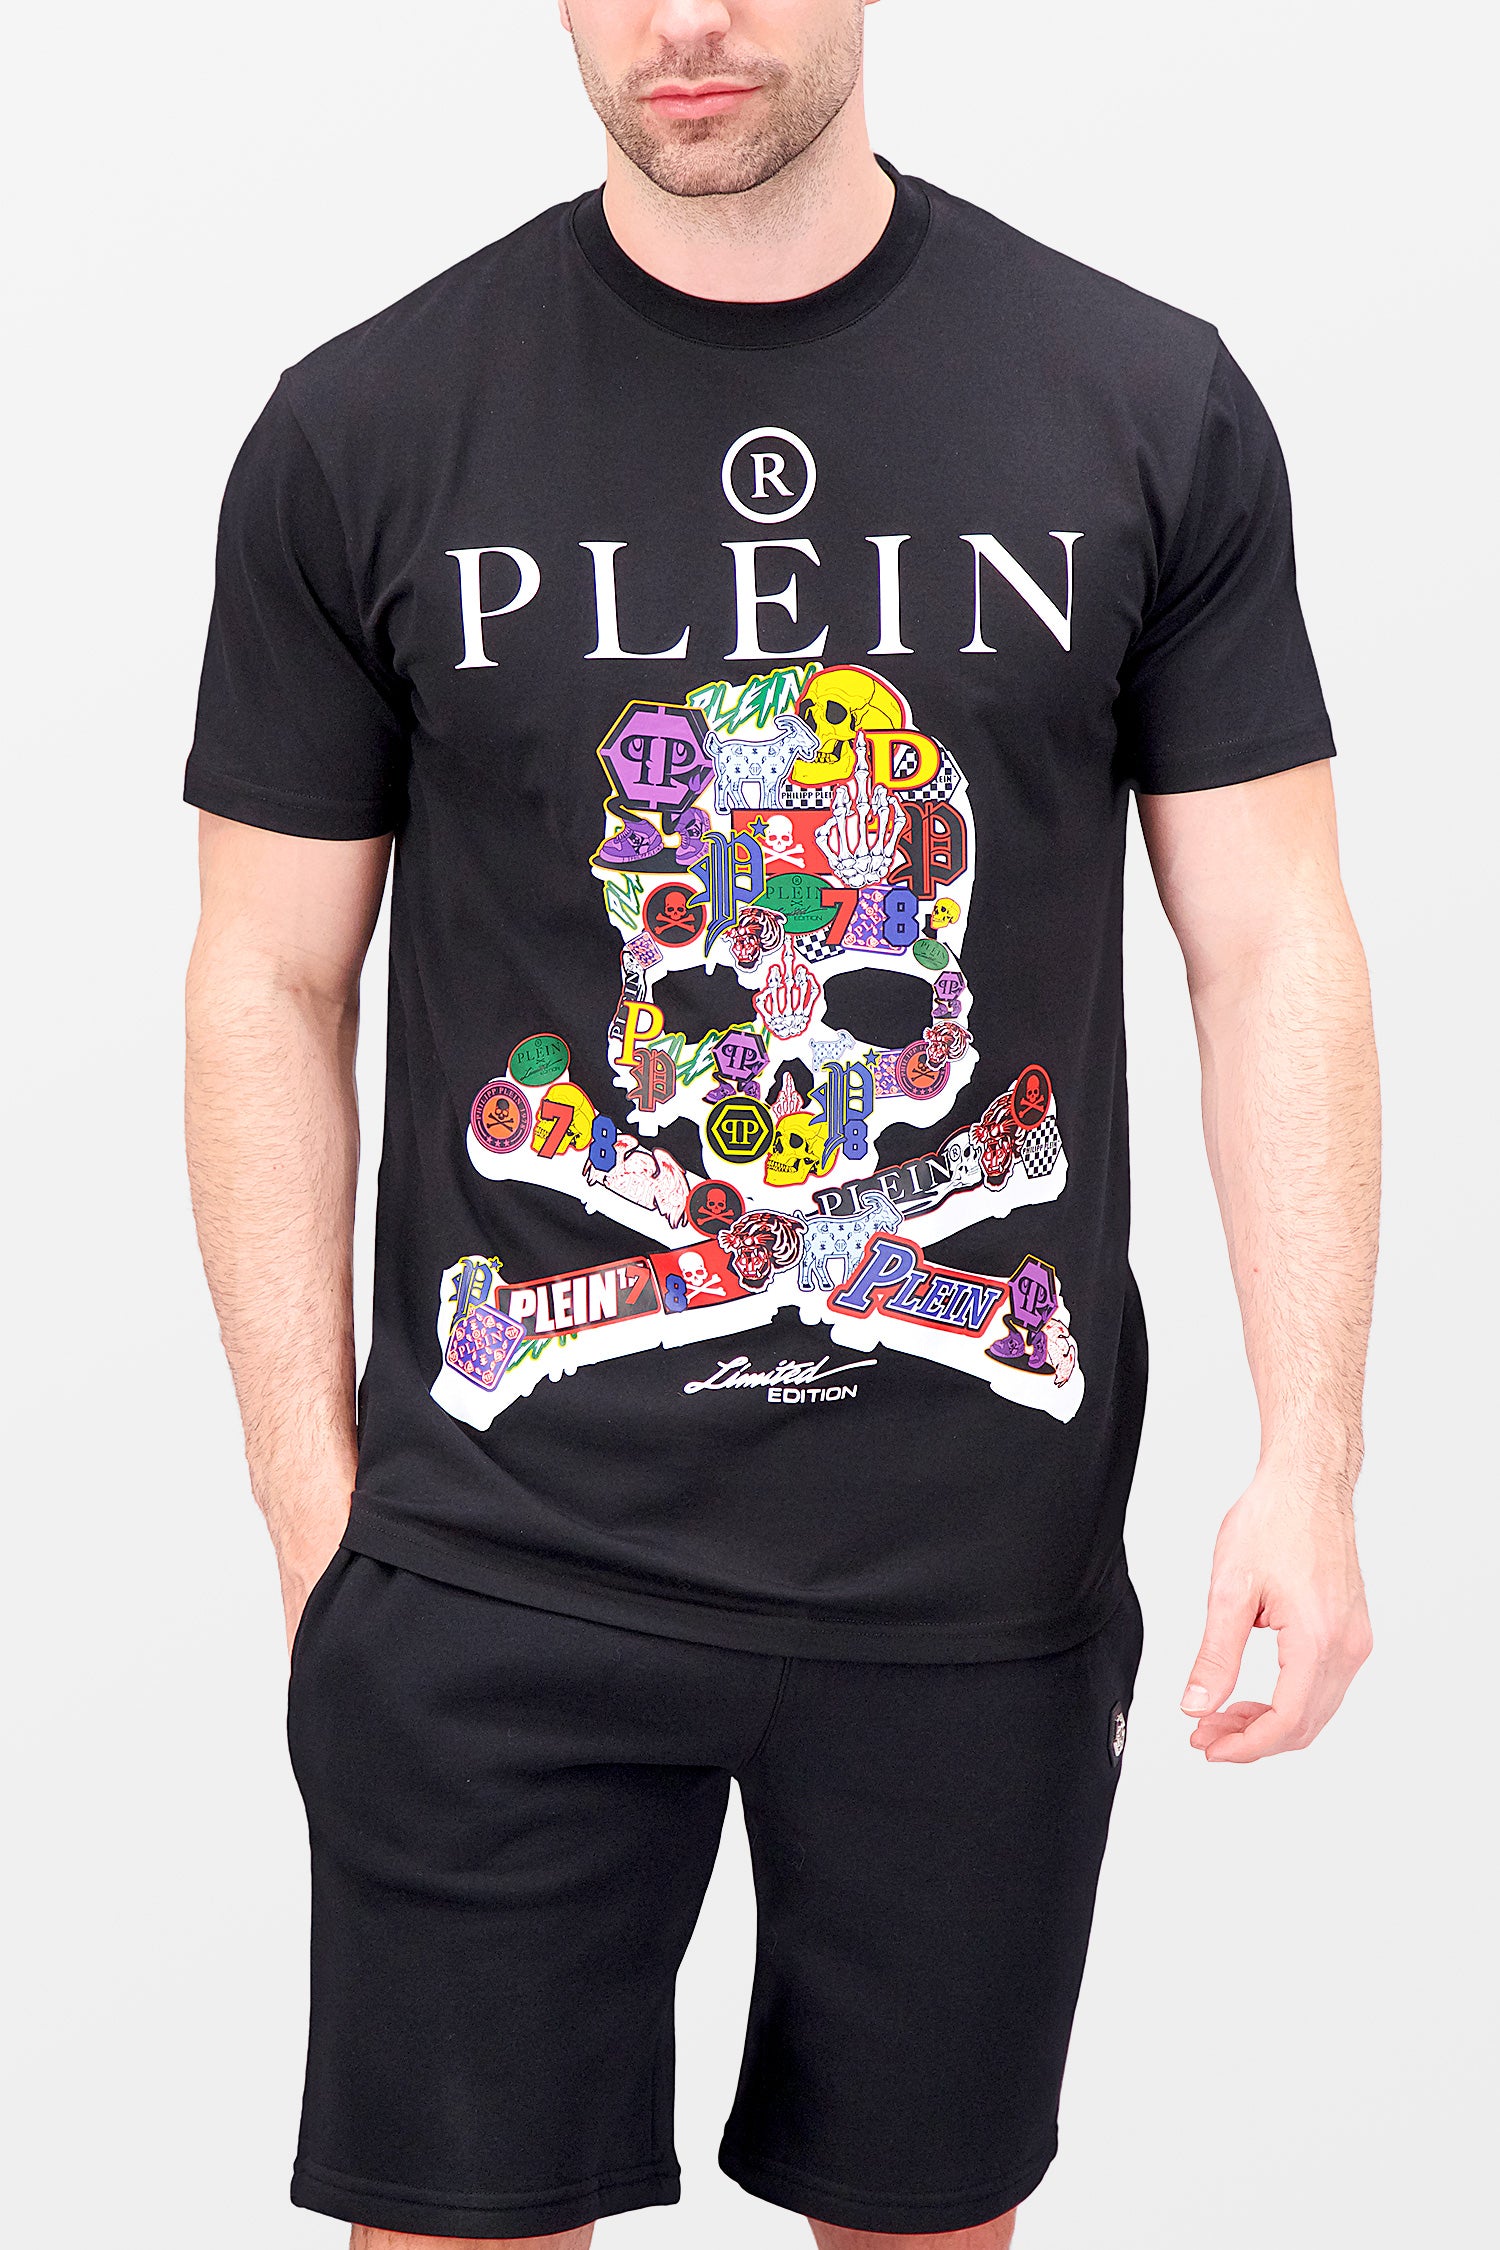 Philipp Plein Black Round Neck Skull T-Shirt